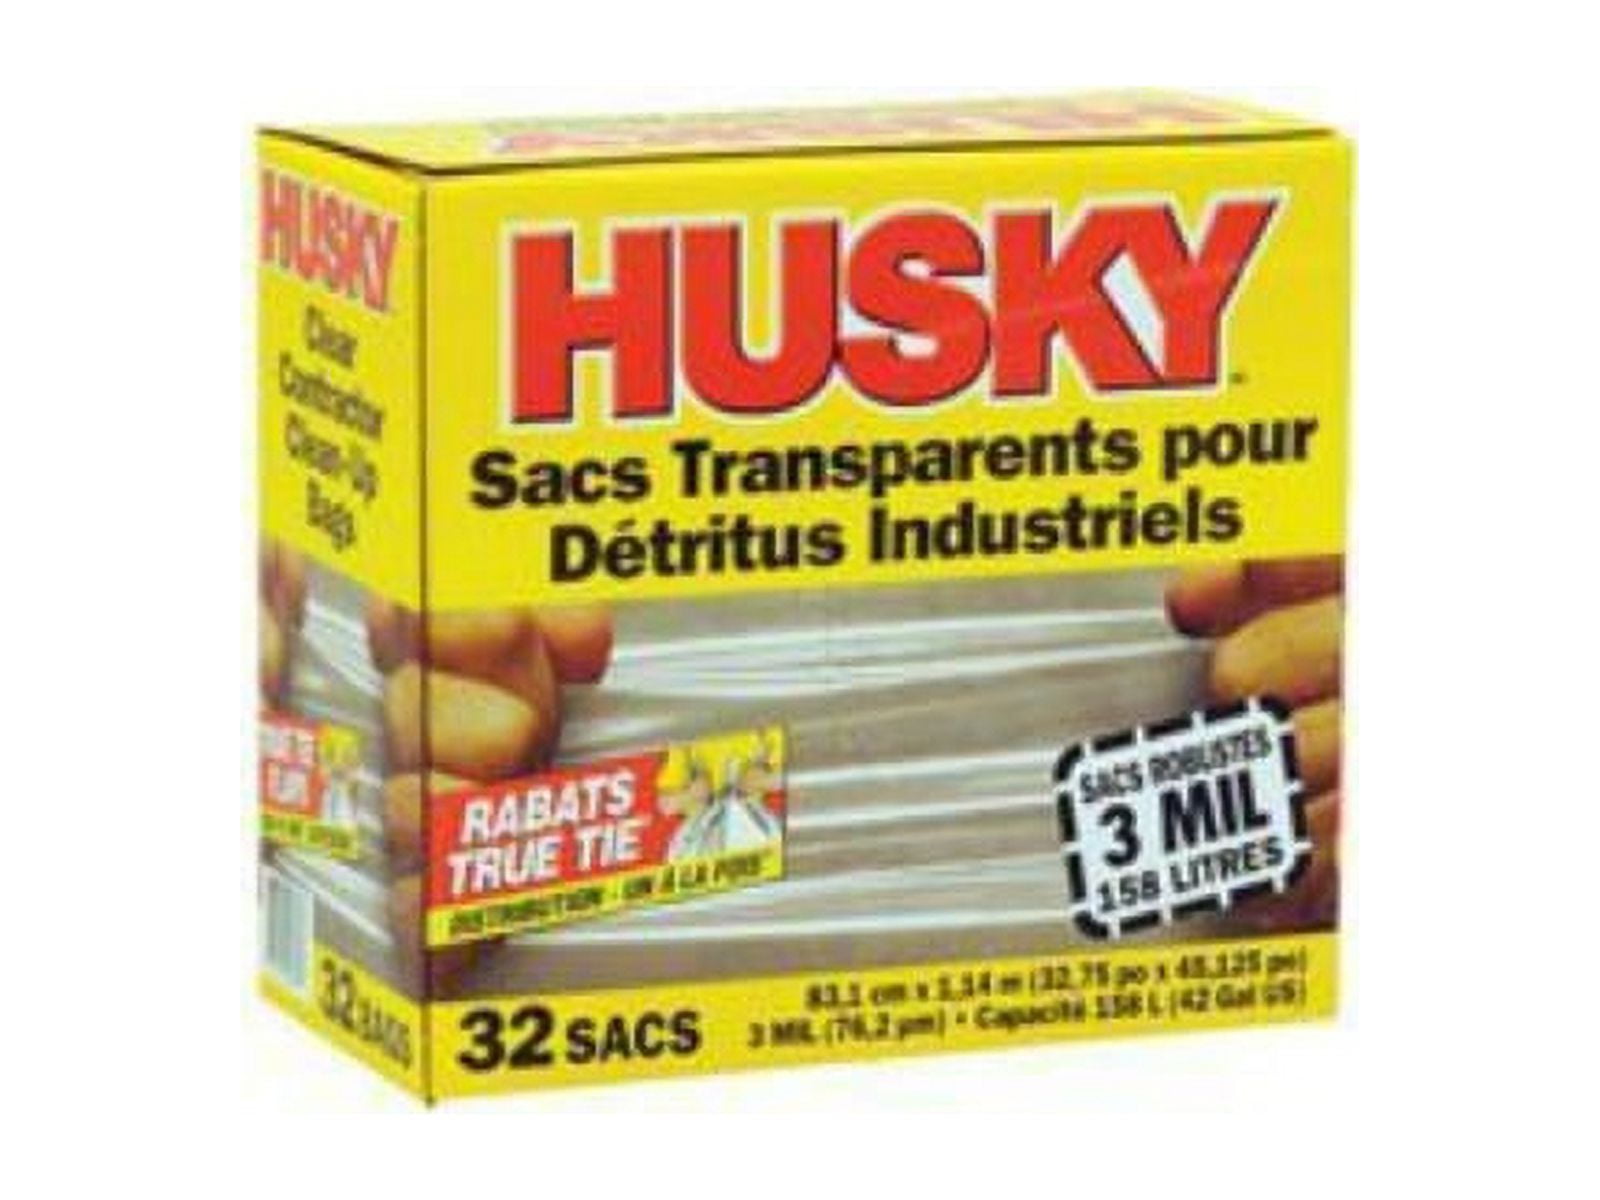 Buy Husky Heavy Duty Contractor Clean-Up Bag, Poly, 42 gallon, 3